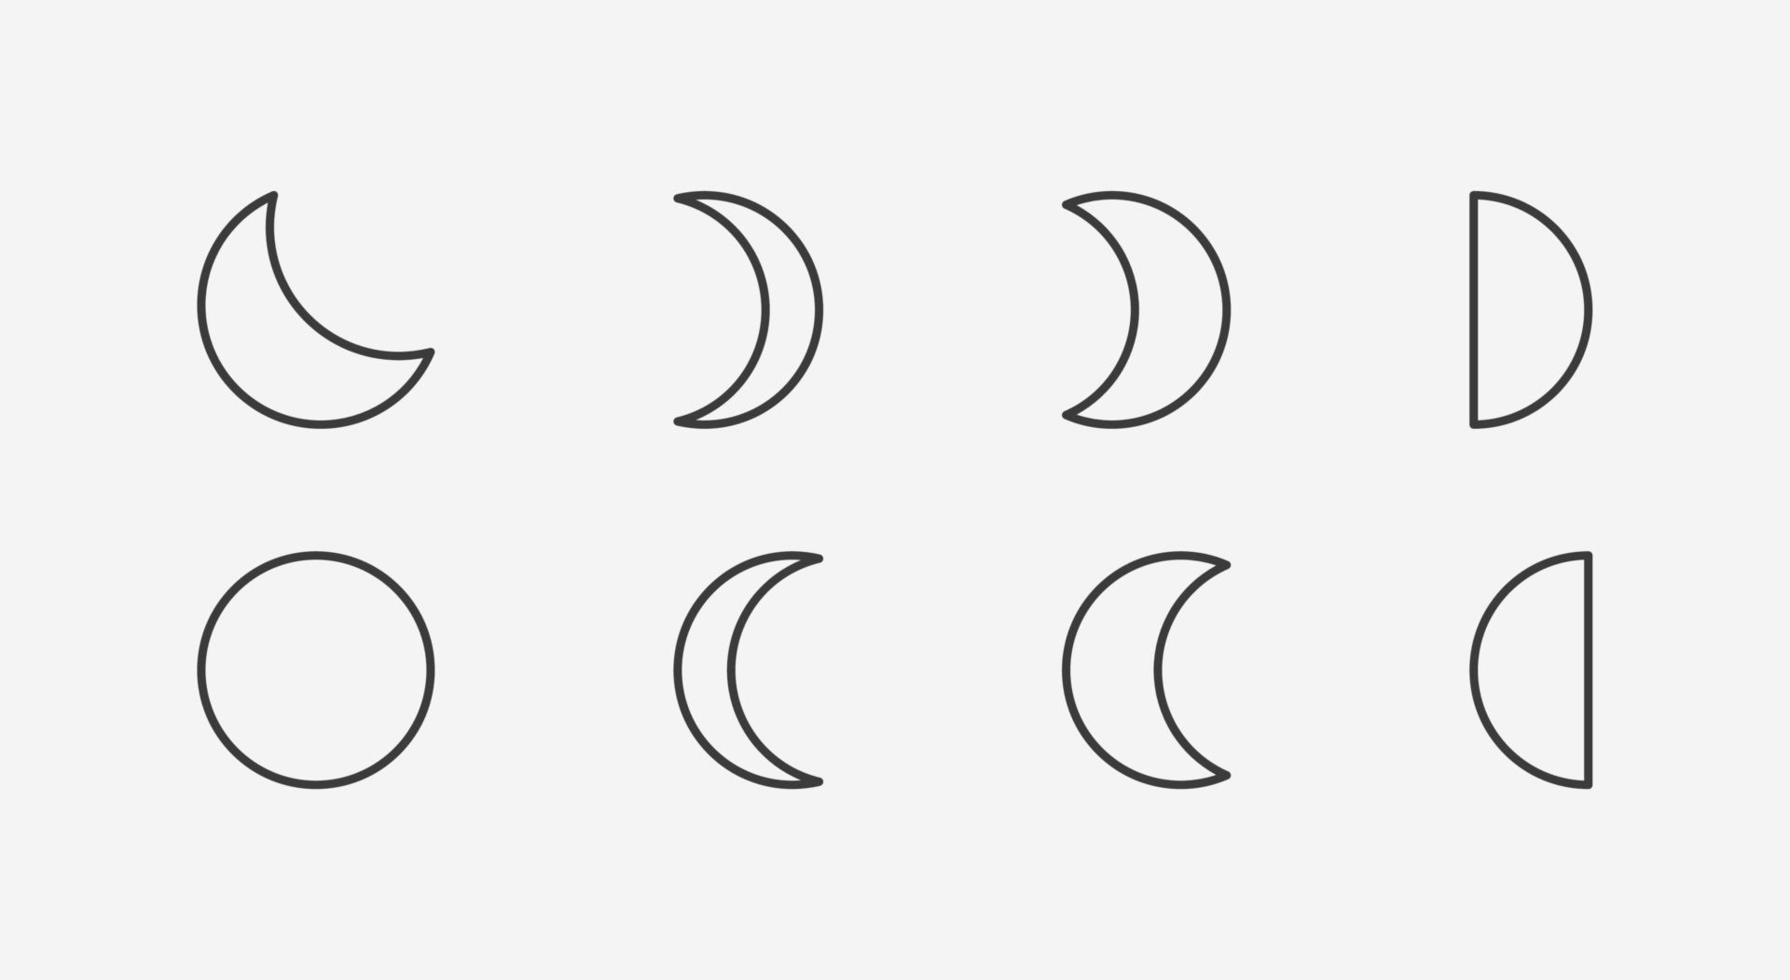 half, full, crescent moon, weather icon vector set sign symbol